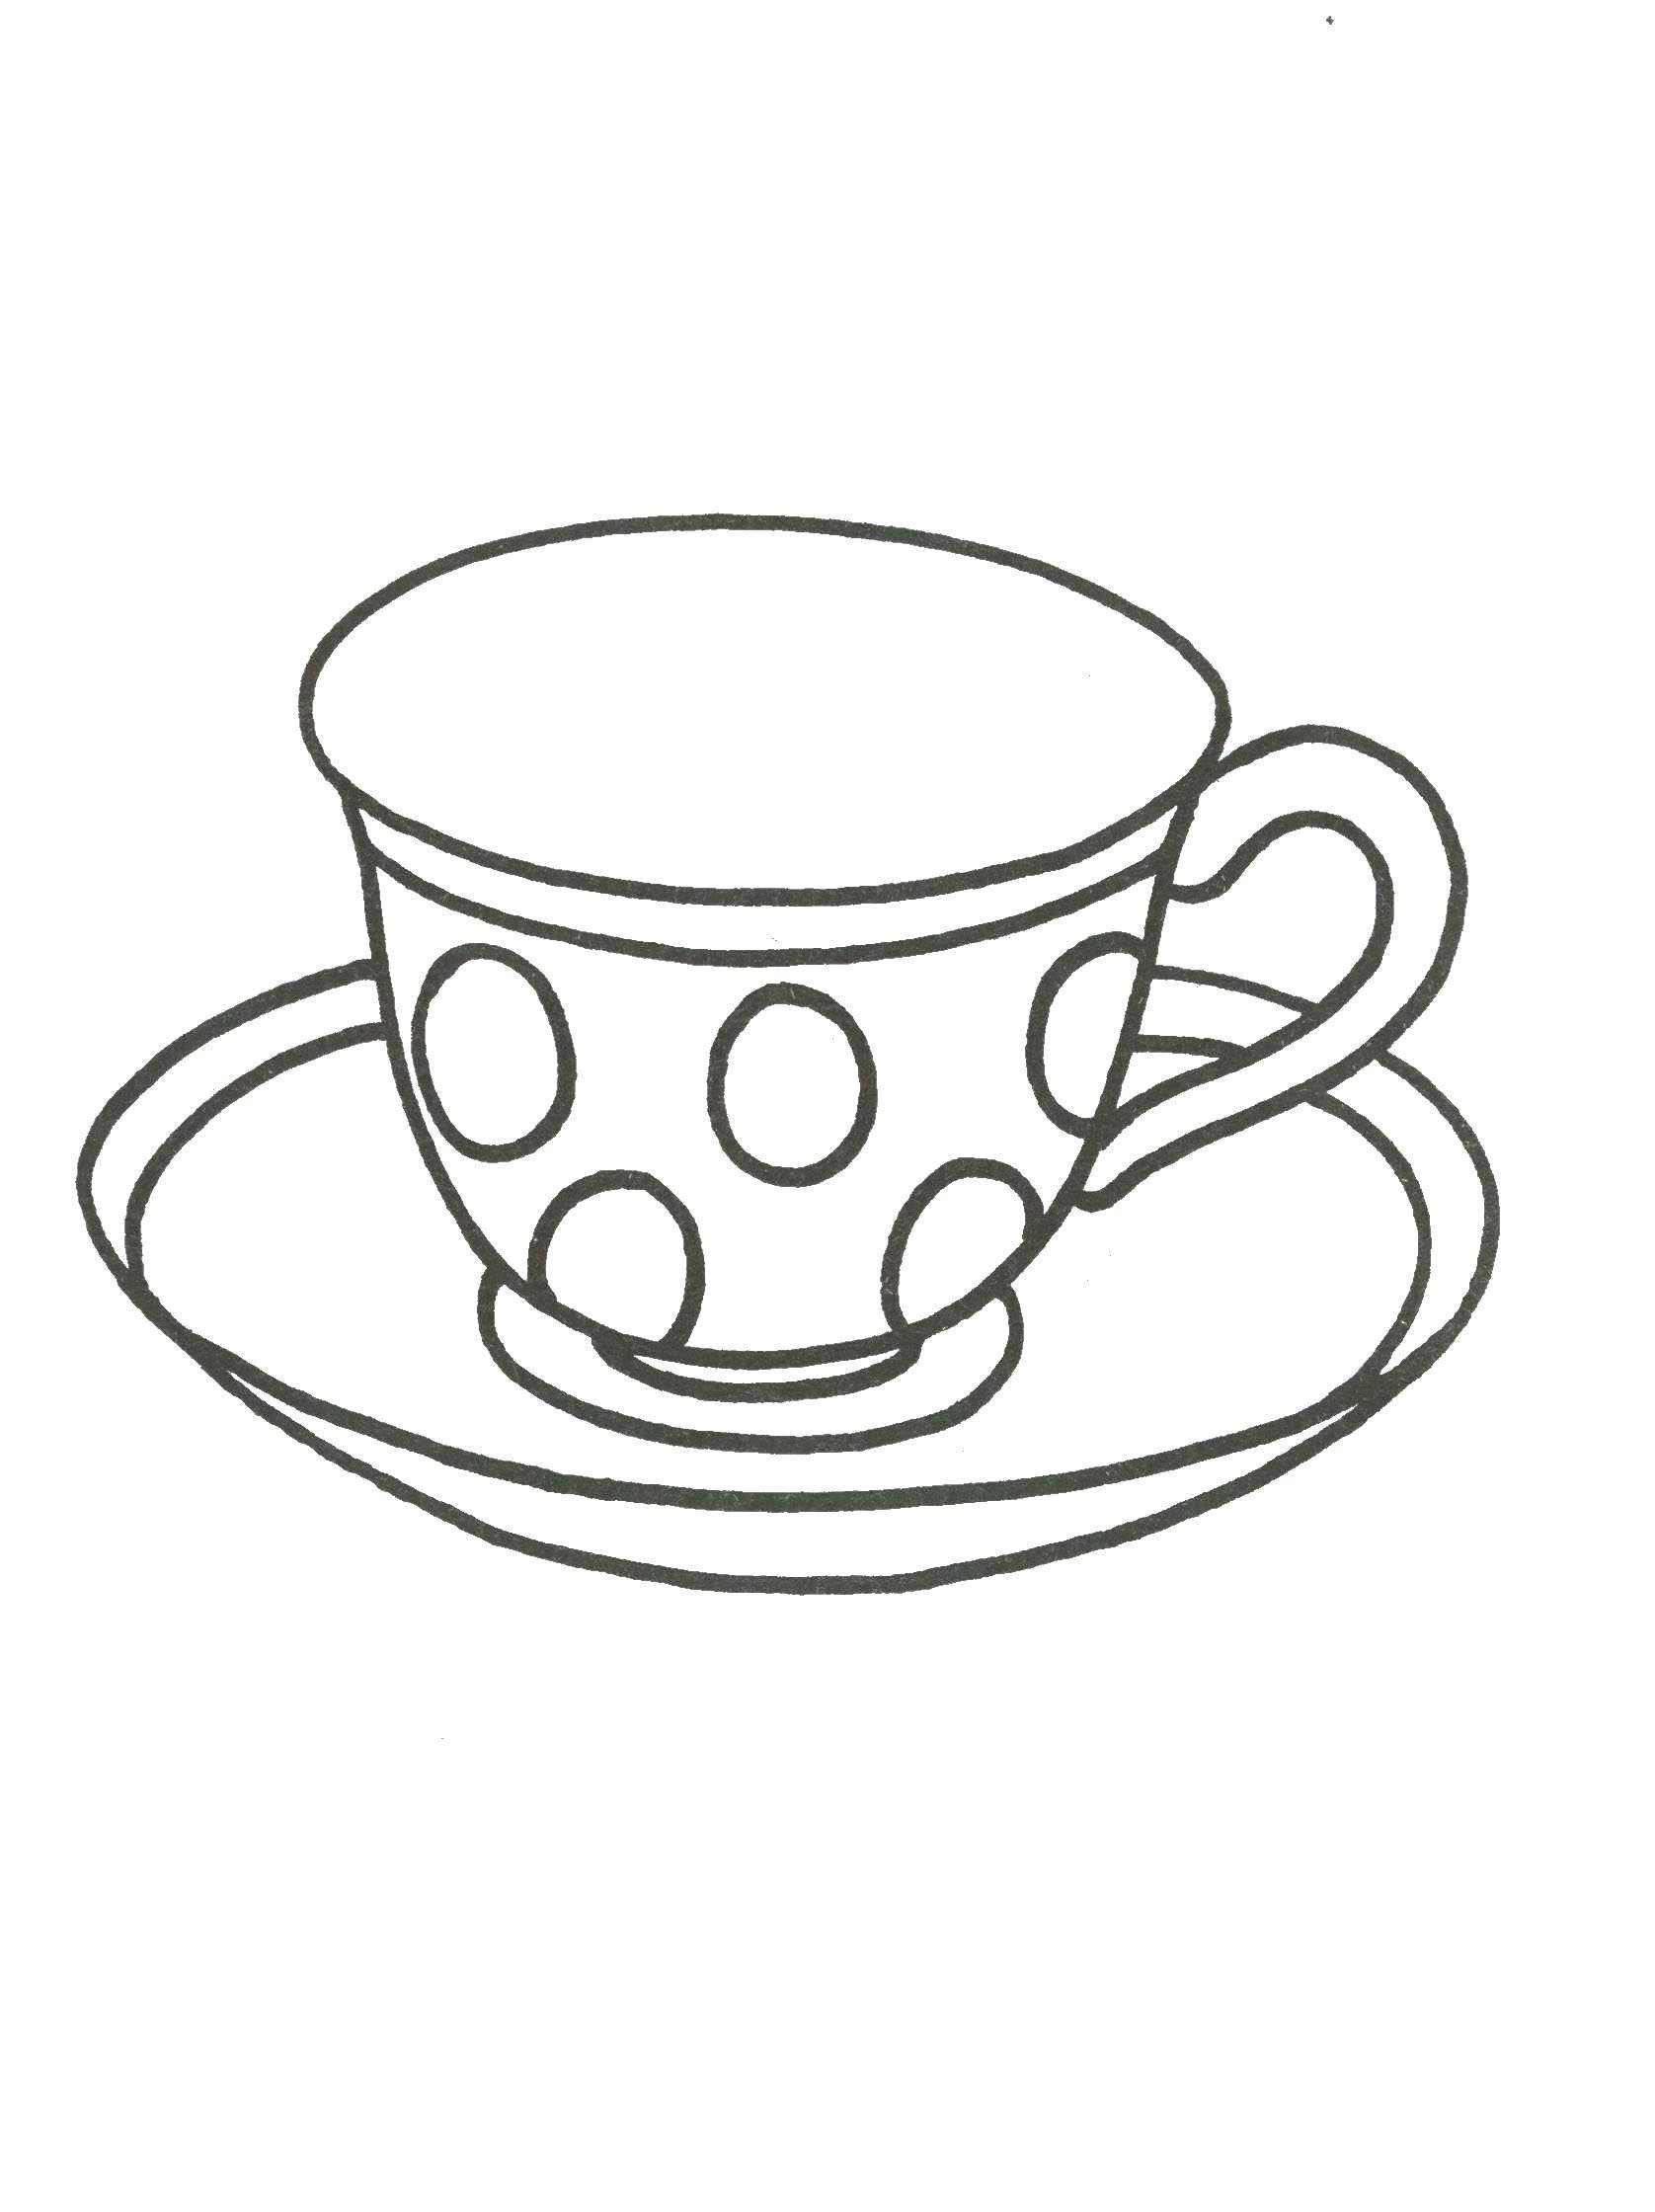 Название: Раскраска Чашка с тарелкой. Категория: посуда. Теги: посуда, чашка, кружка, тарелка.